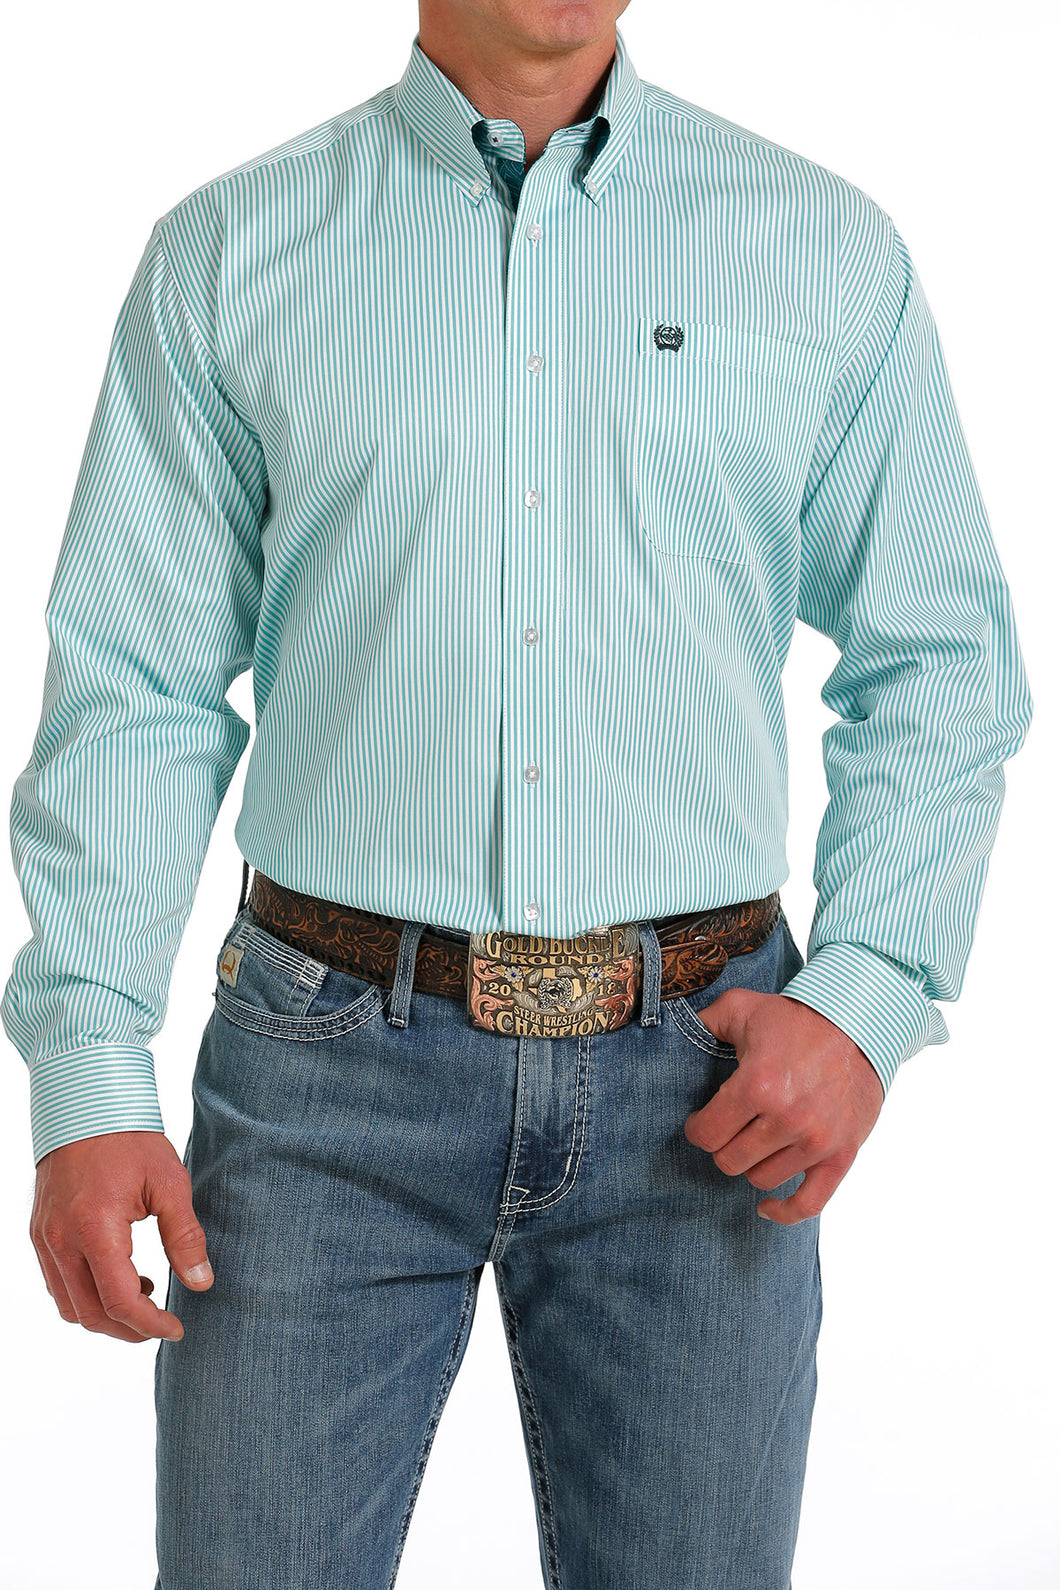 Pard's Western Shop Men's Cinch Turquoise/White Micro Stripe TENCEL Button-Down Shirt